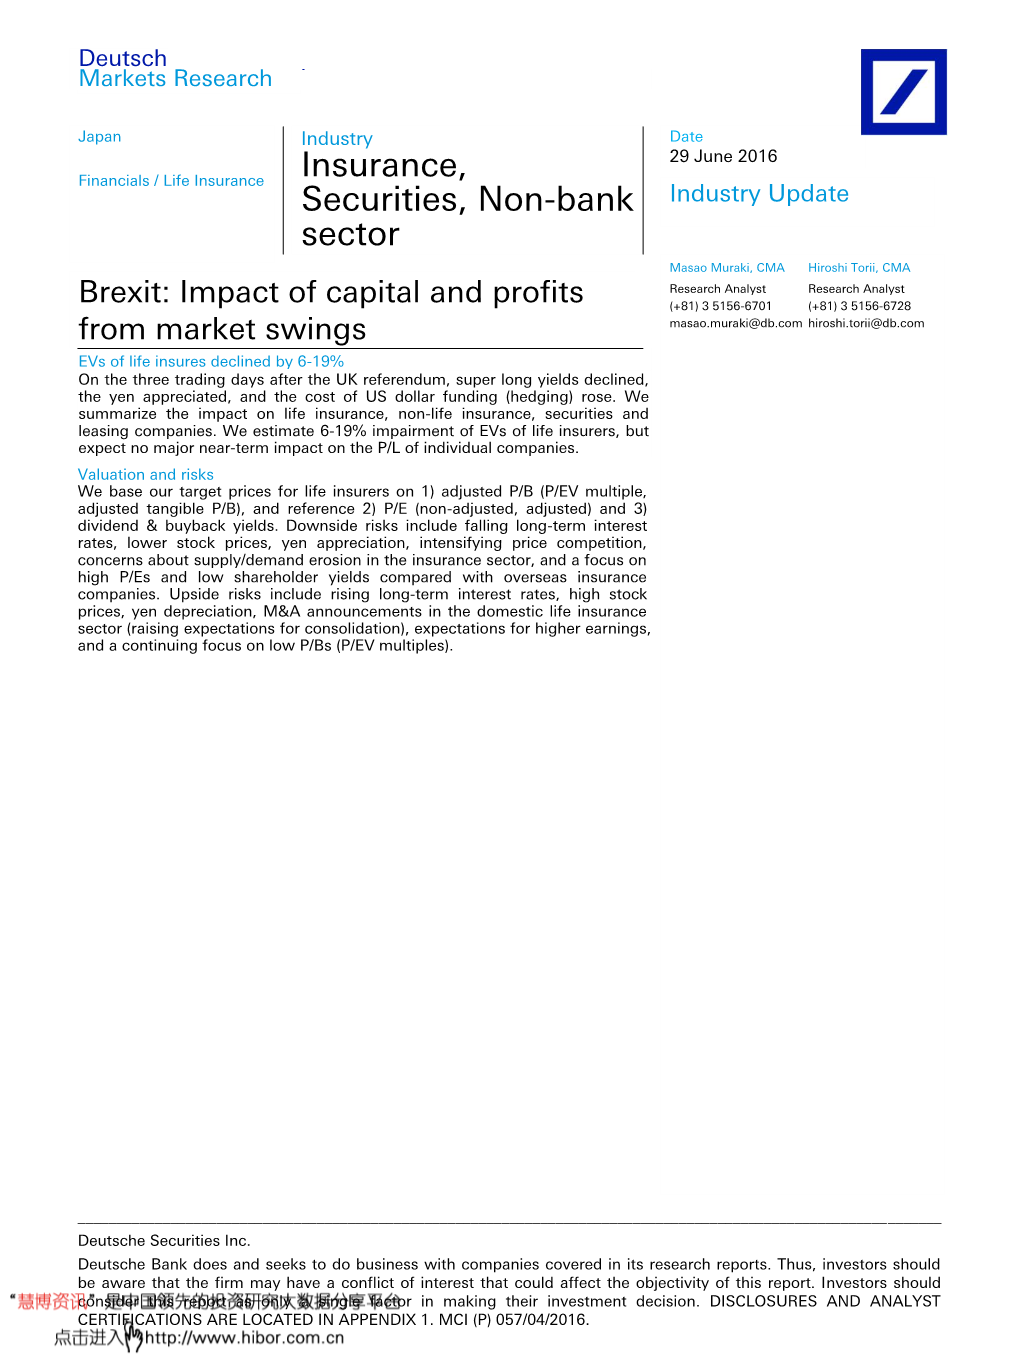 Insurance, Securities, Non-Bank Sector